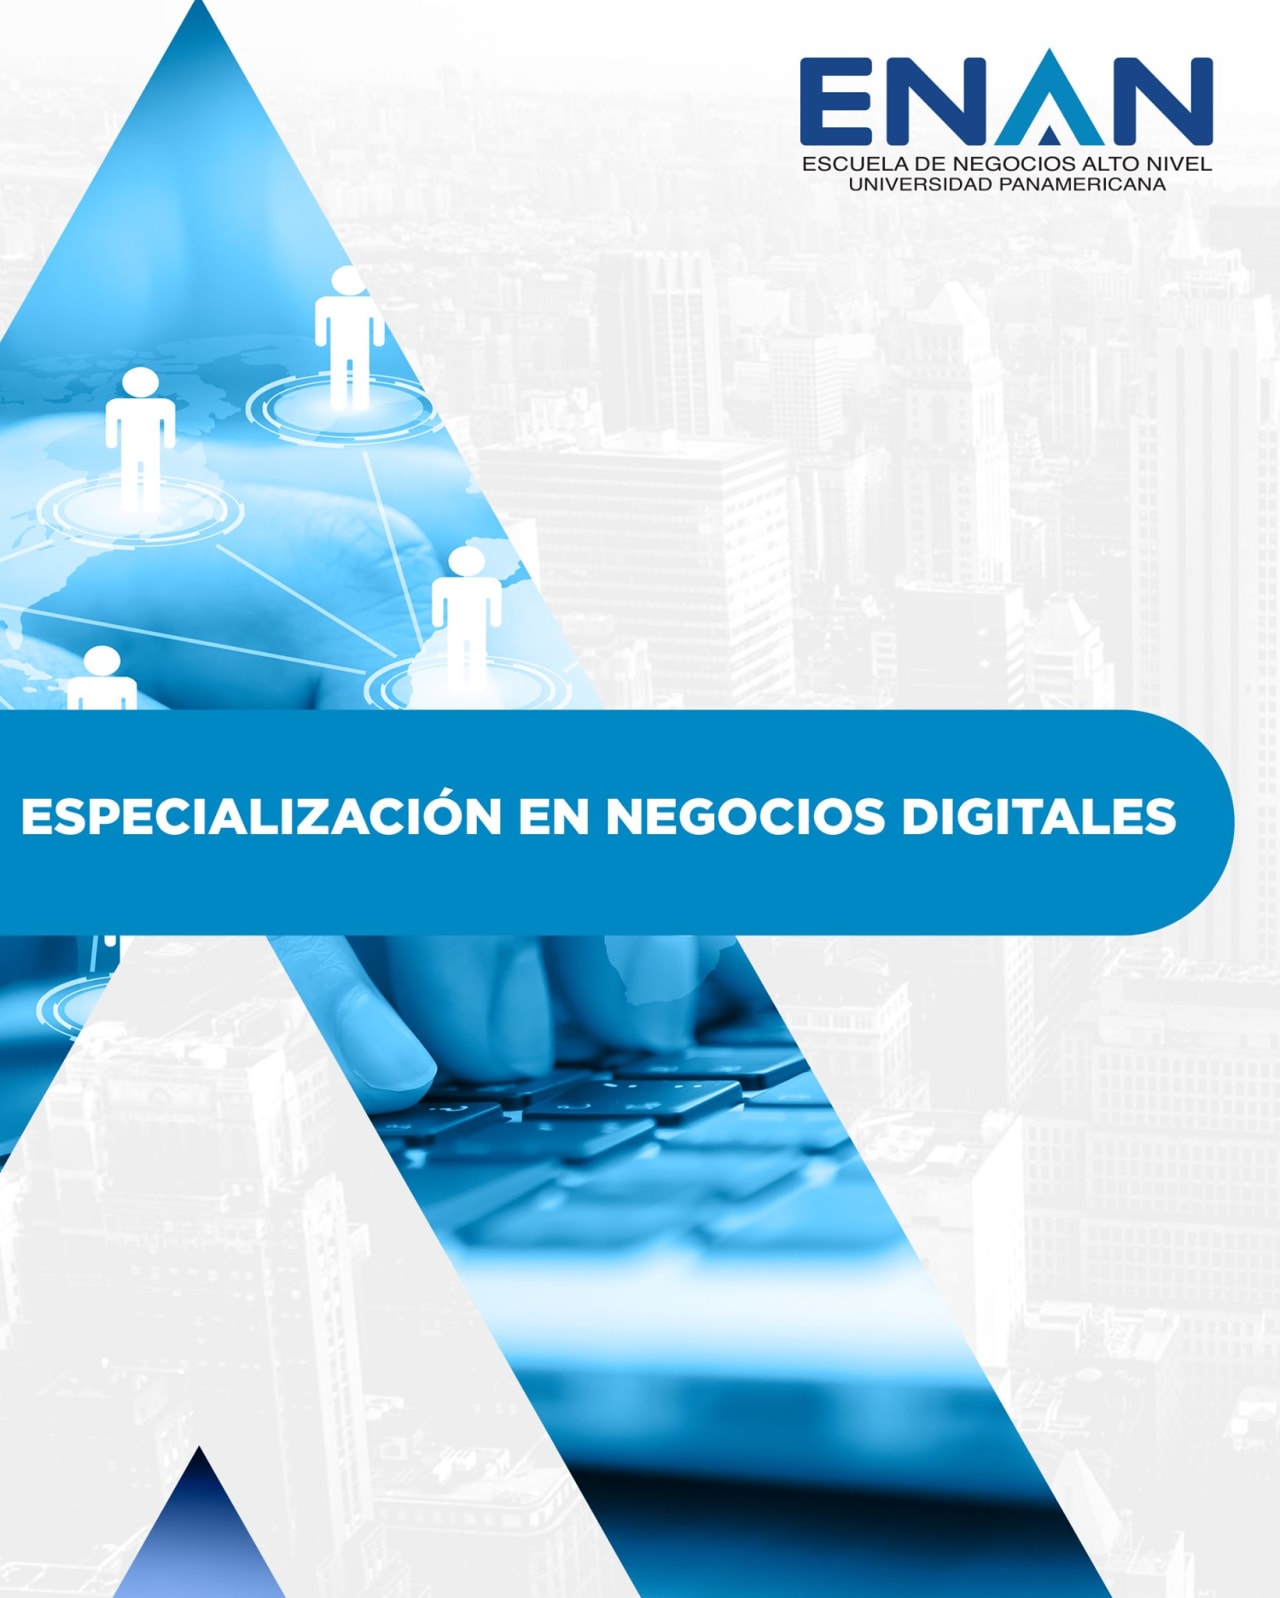 Escuela de Negocios Alto Nivel - Universidad Panamericana de Guatemala Специјализација дигиталног пословања